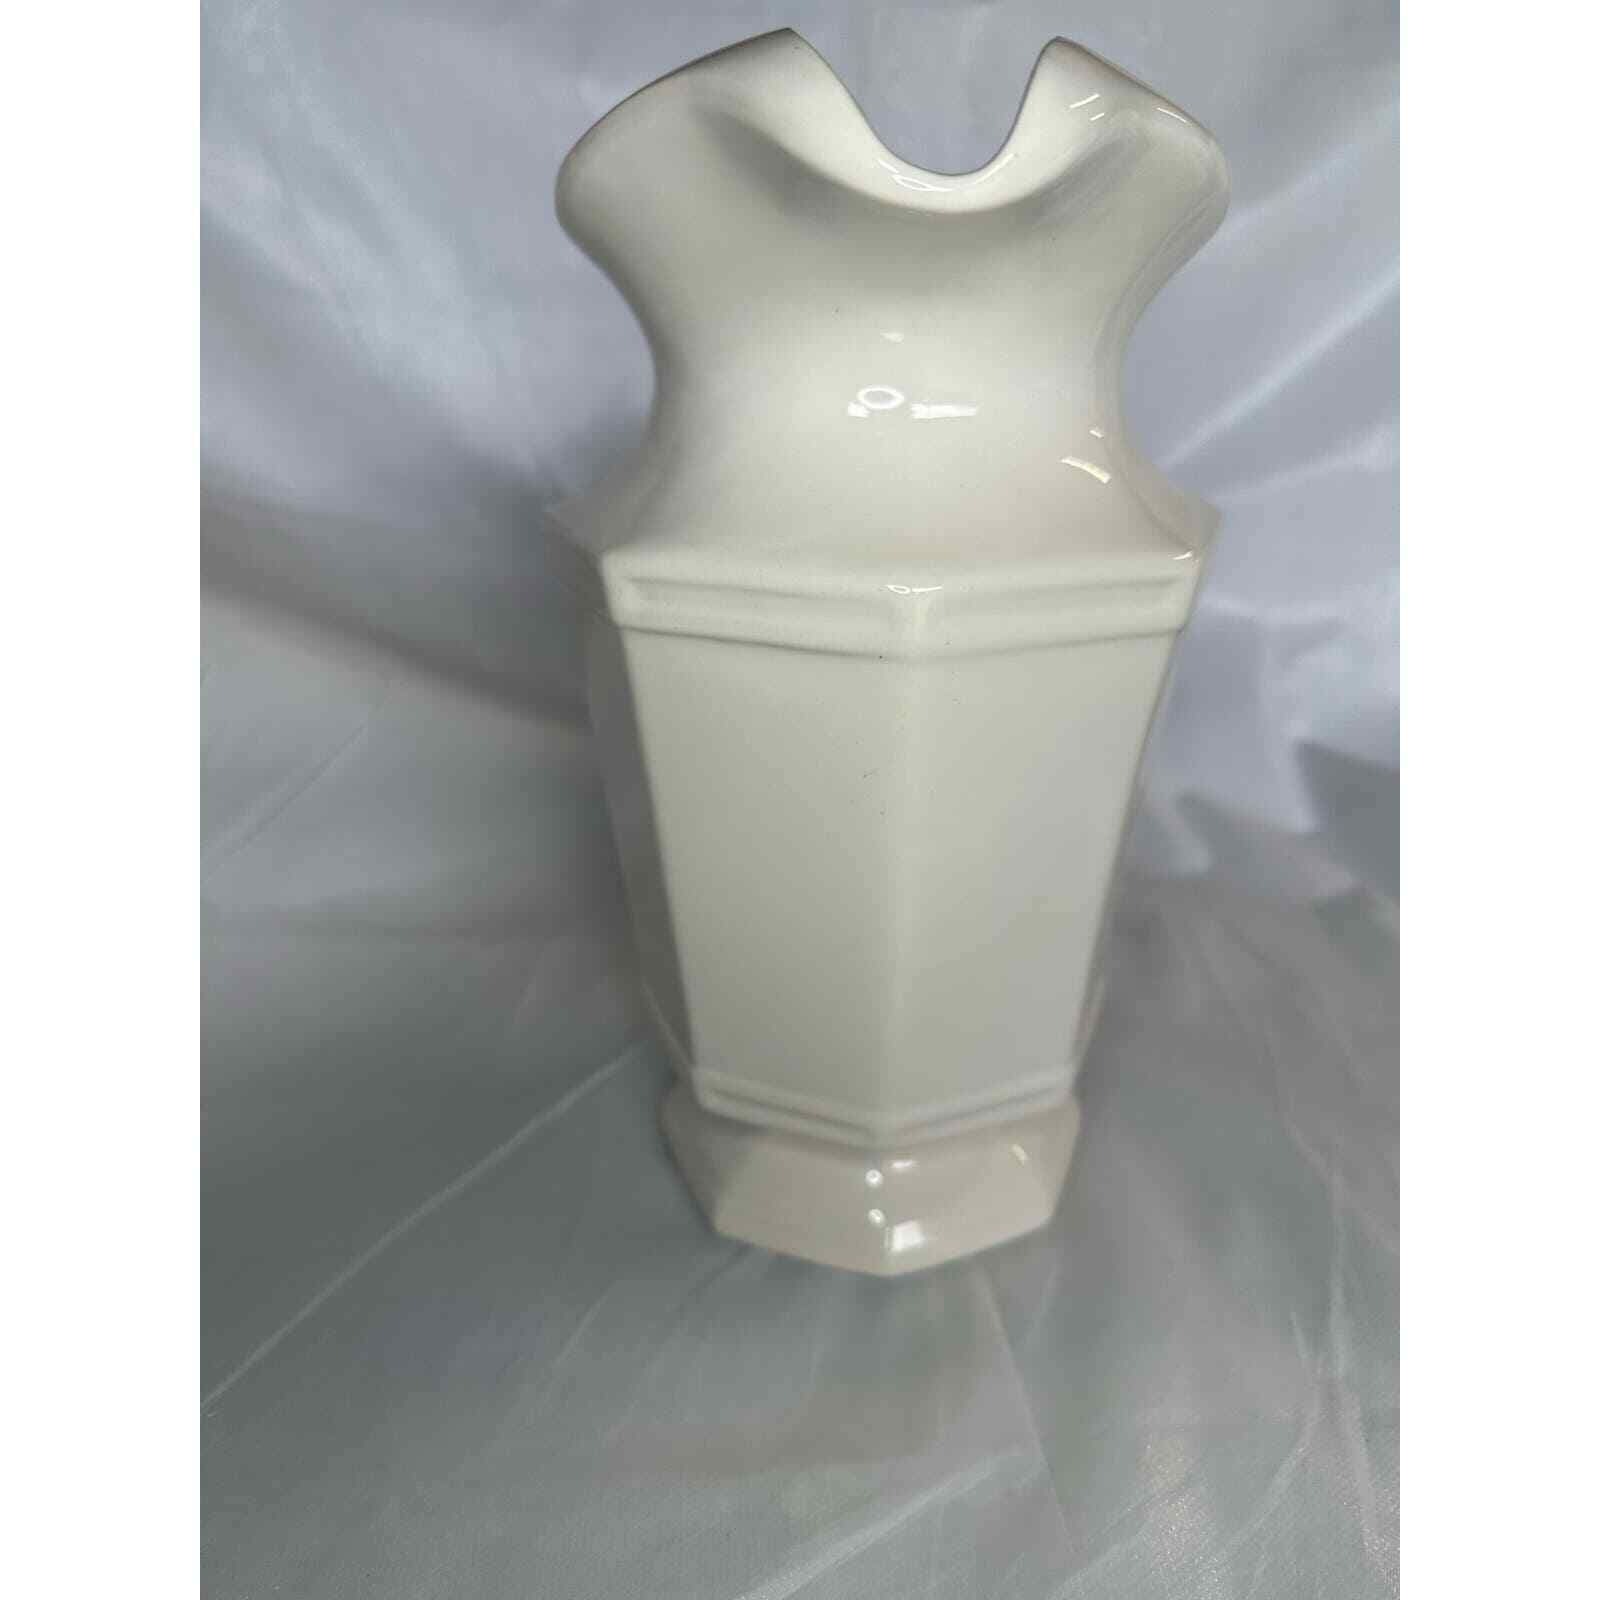 USA pottery 7537 octagonal pitcher 10.5” tall 4.5” base 